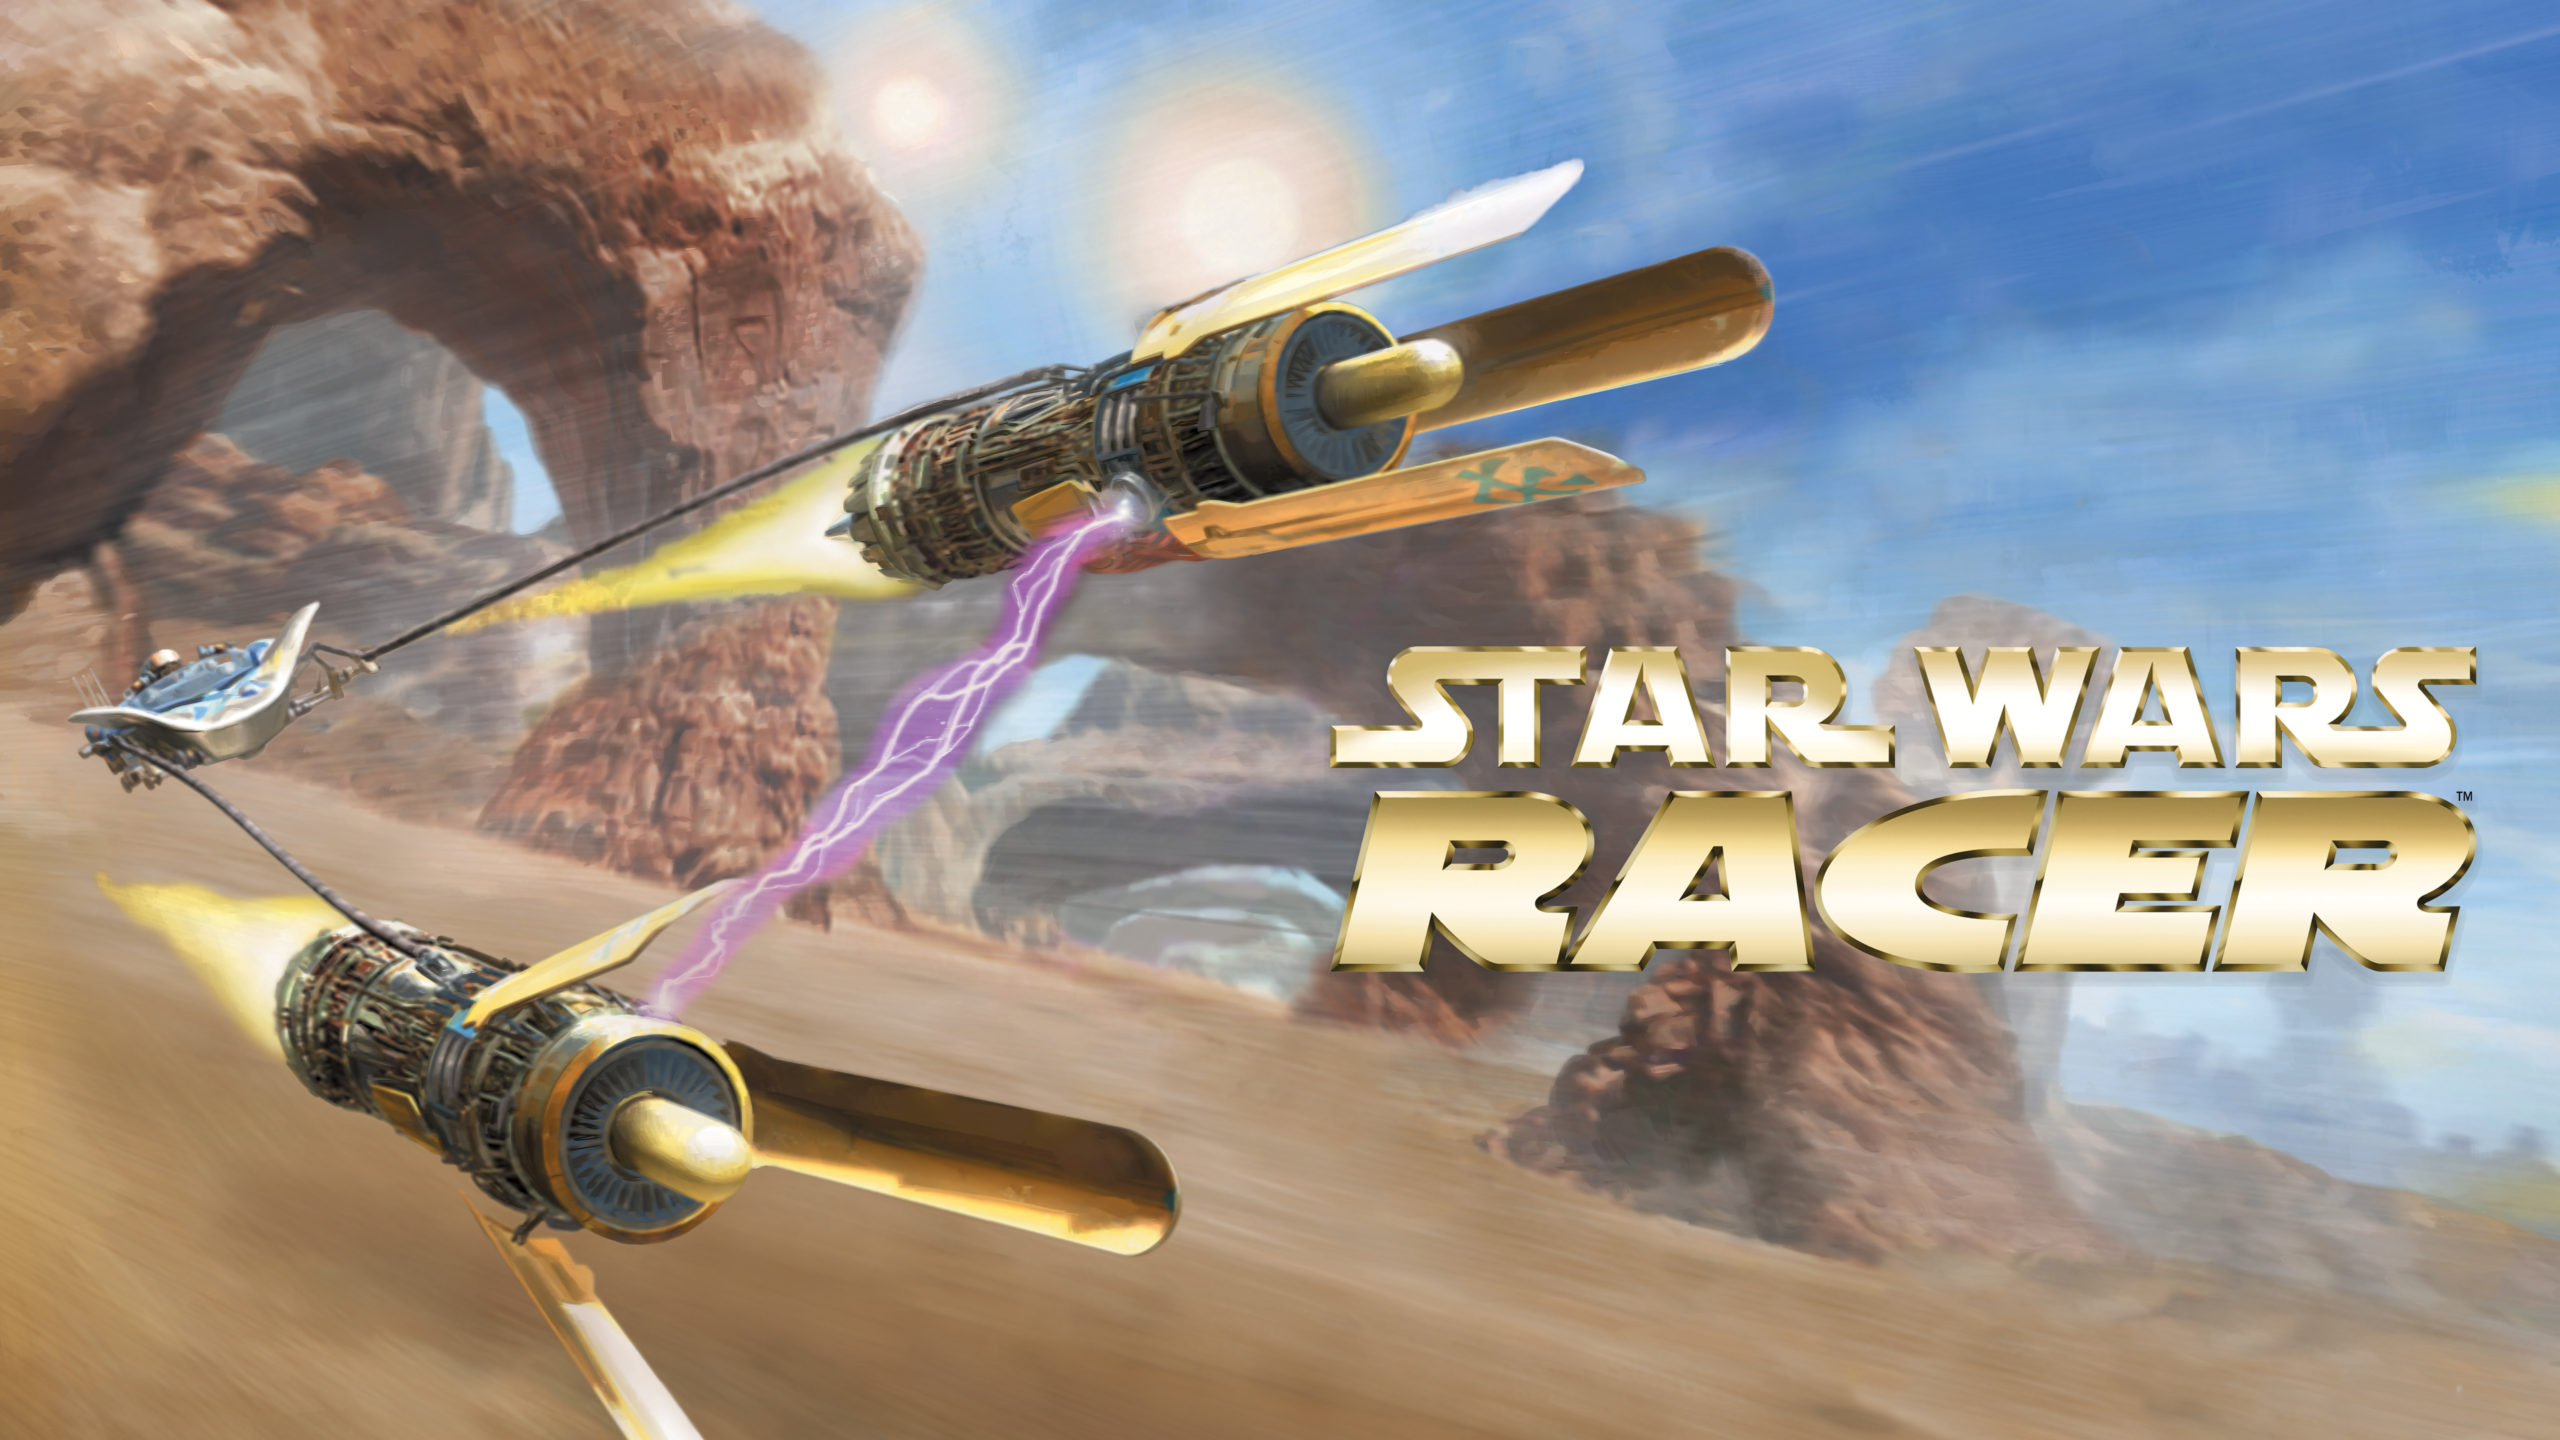 star wars episode 1 racers